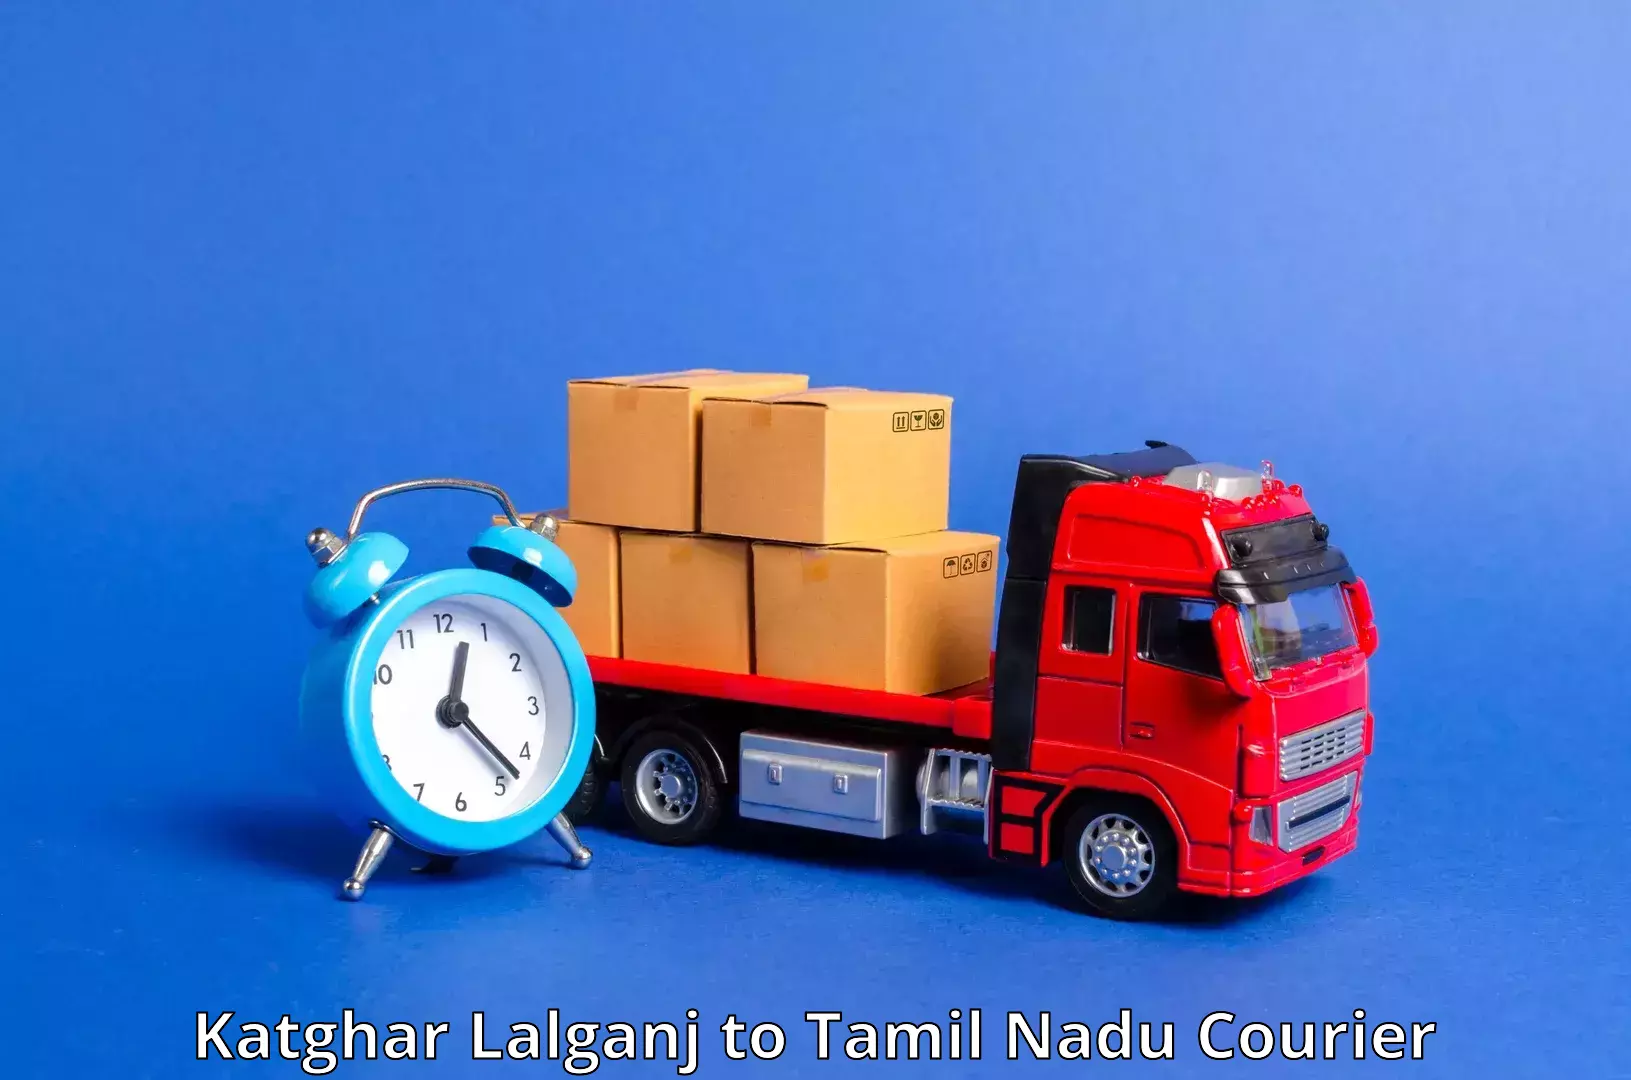 International parcel service Katghar Lalganj to Vilathikulam